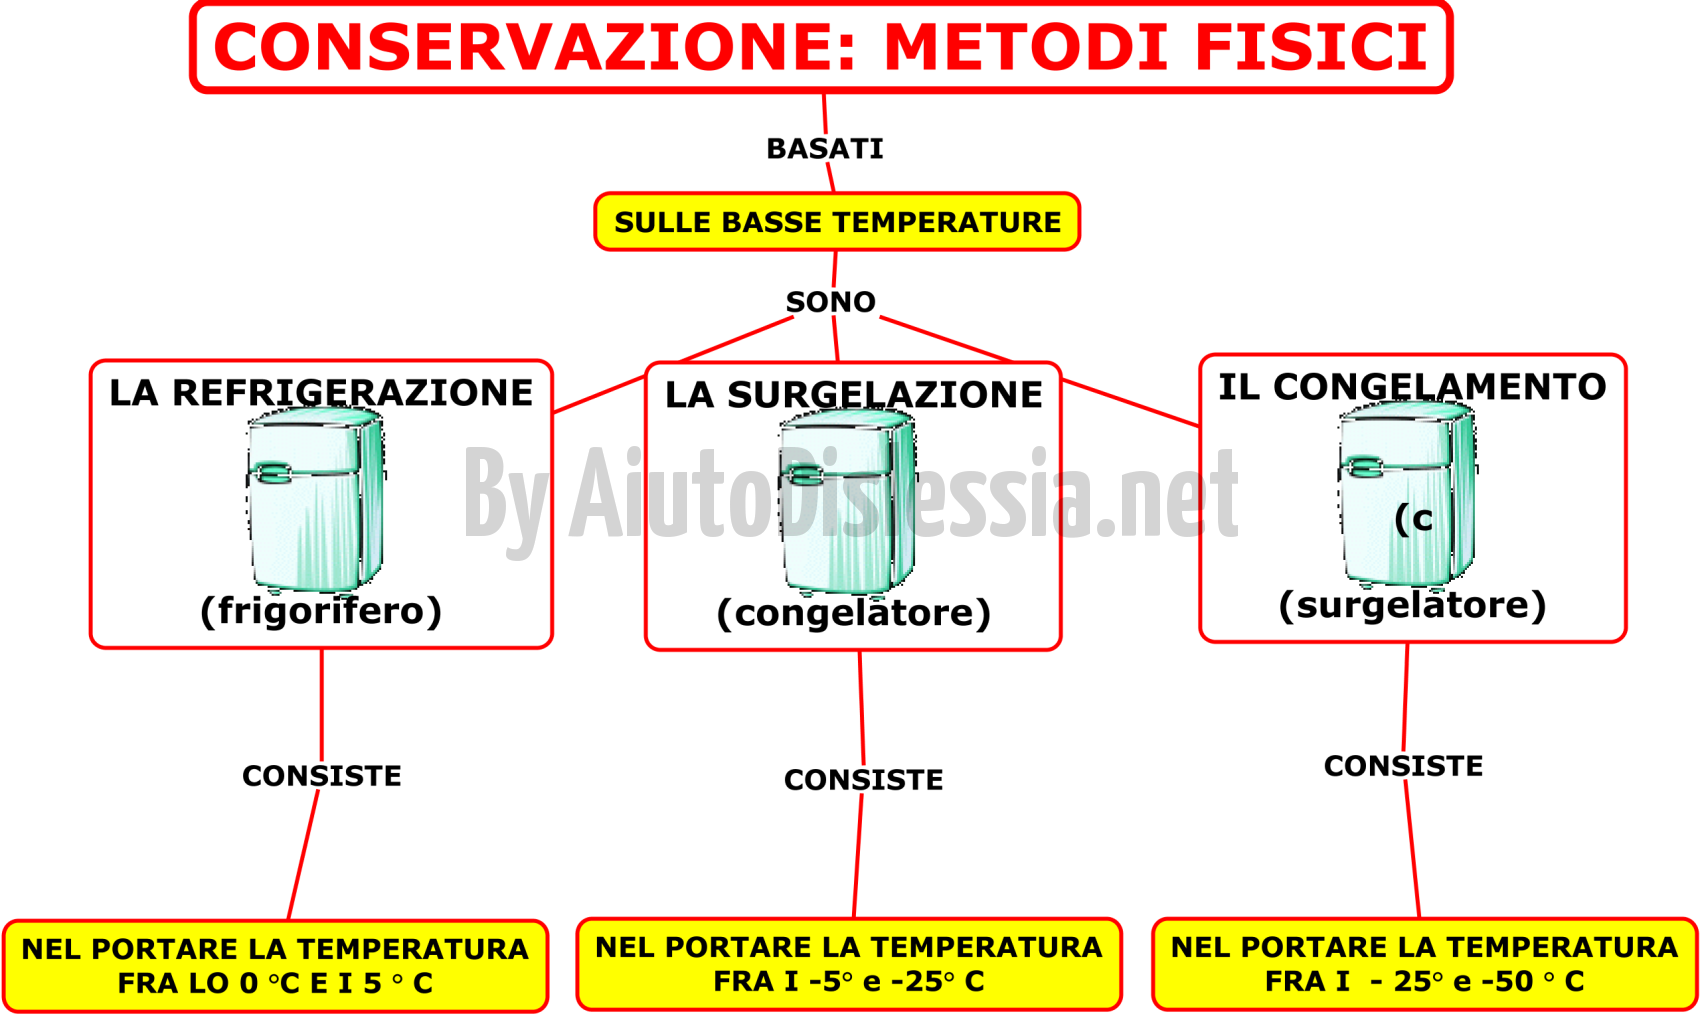 18. CONSERVAZIONE METODI FISICI BASSE TEMPERATURE